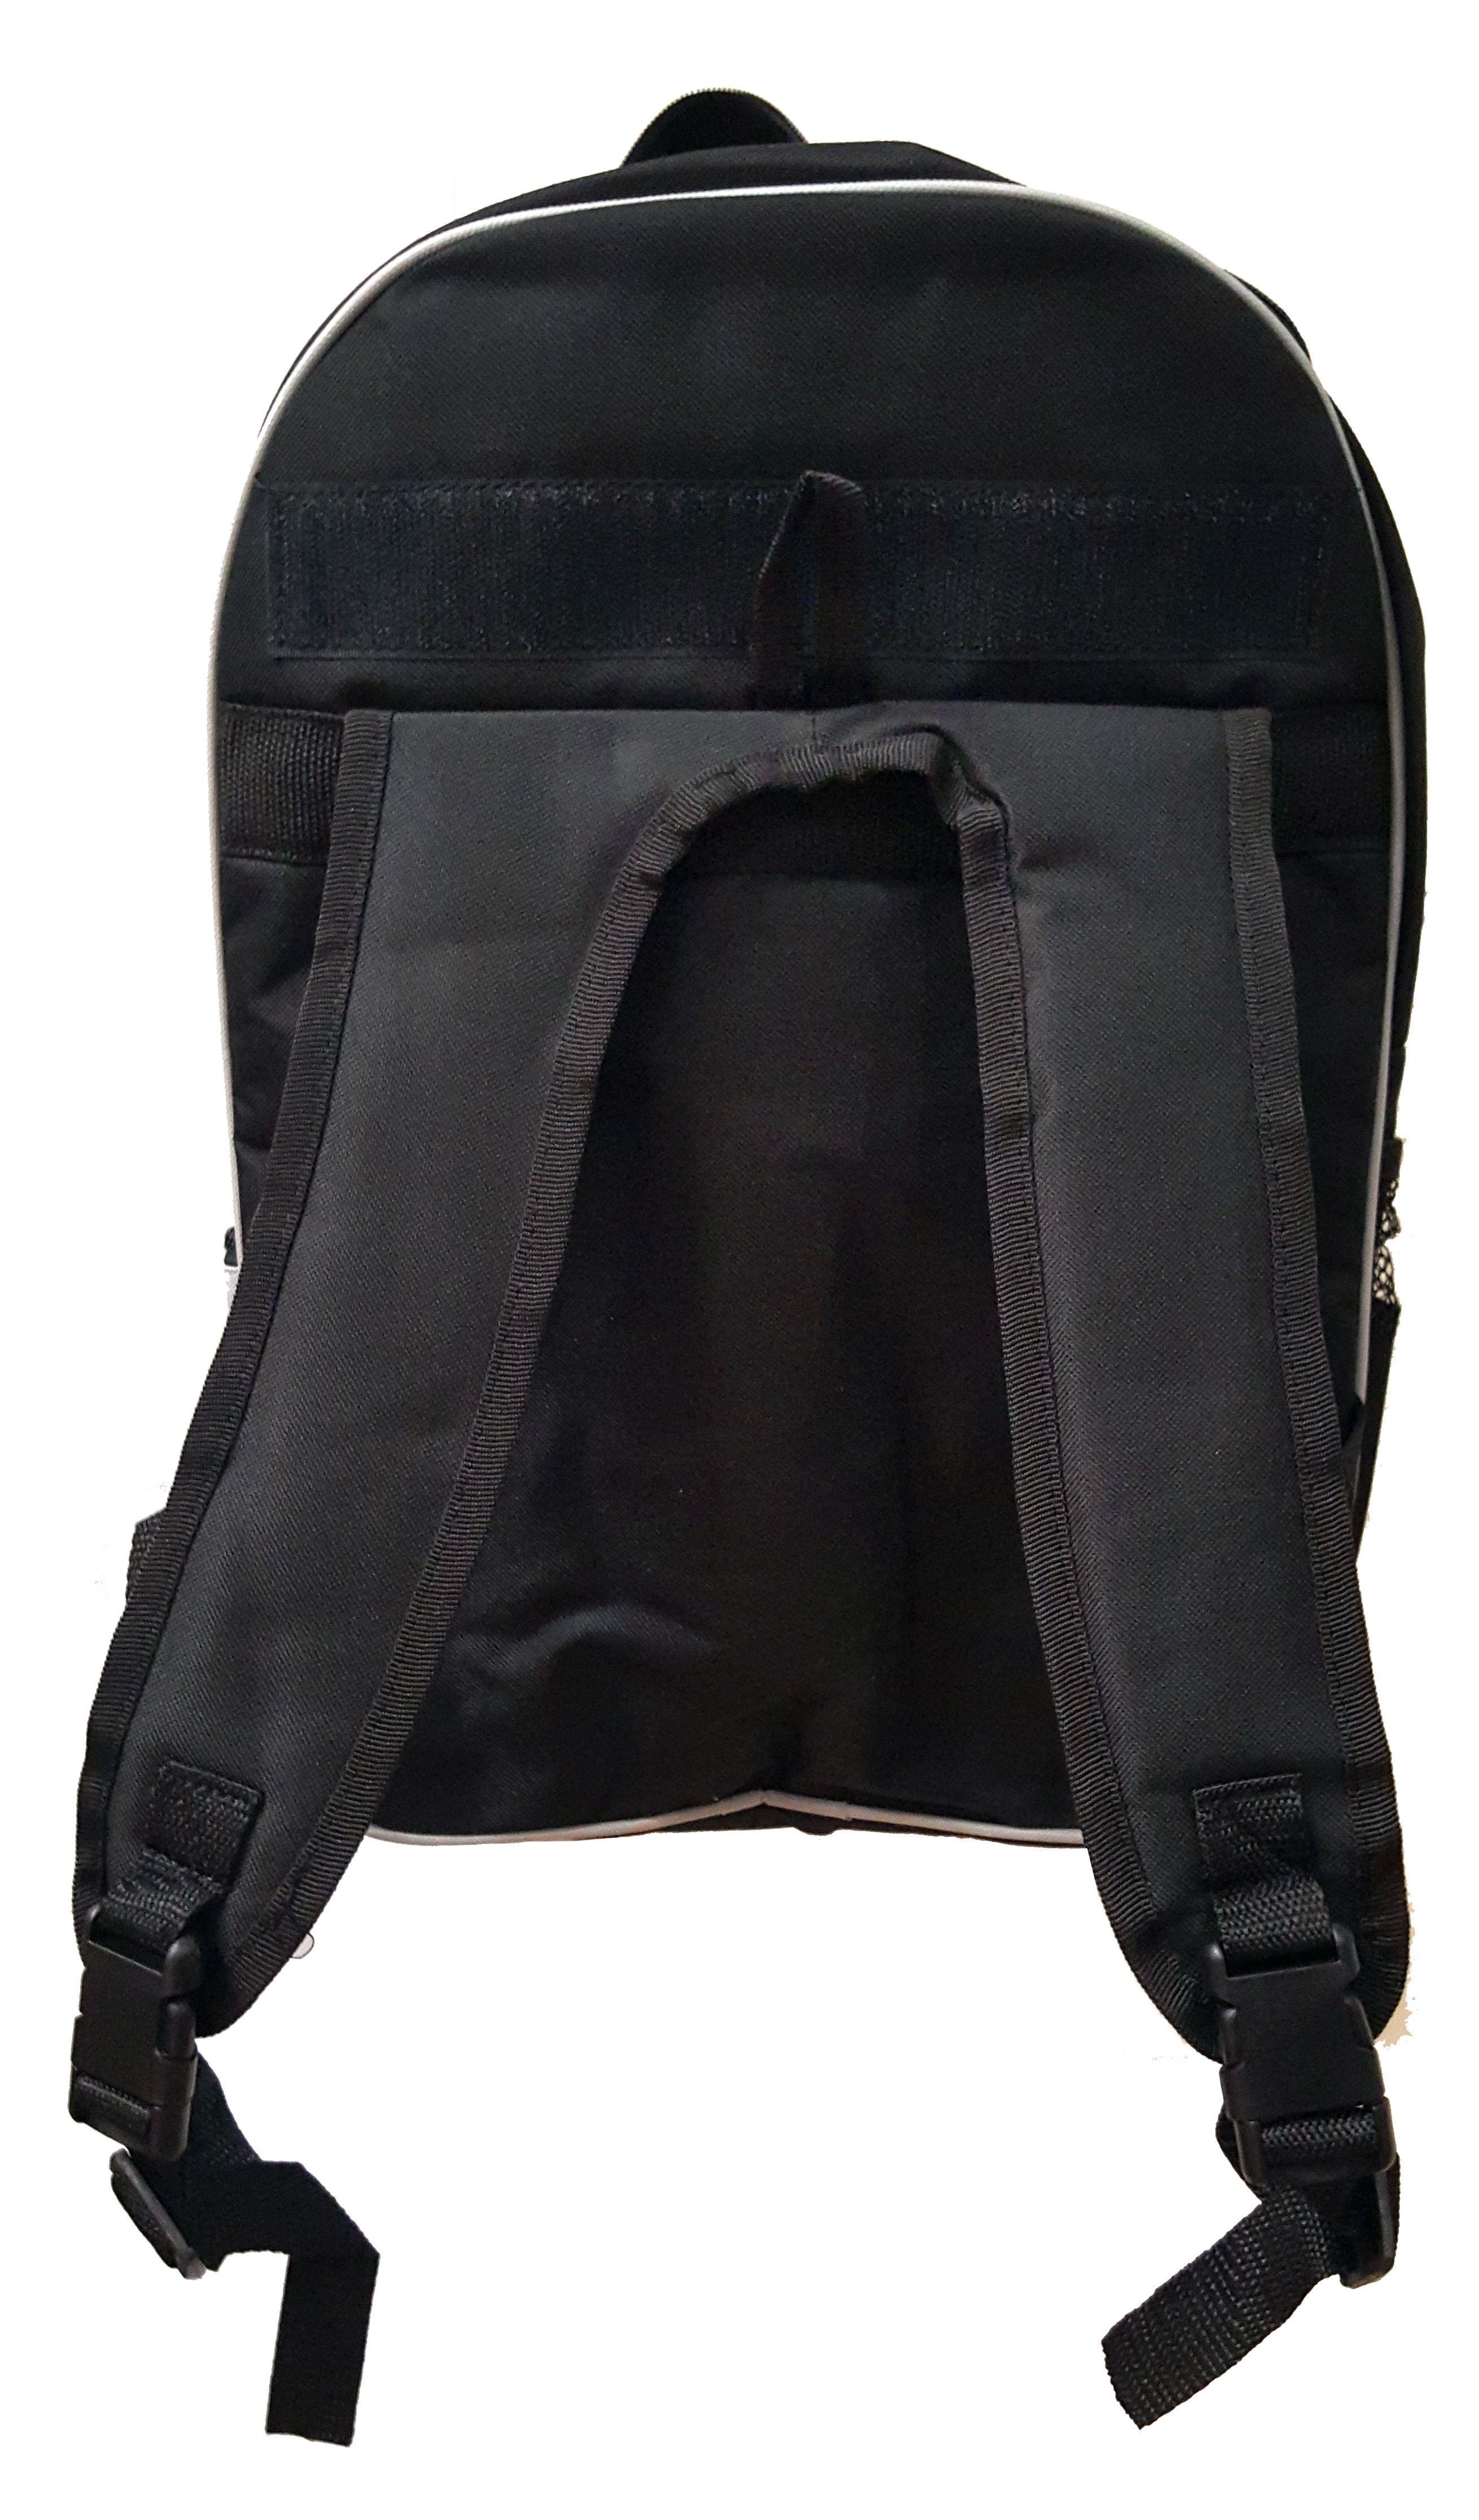 Pink Camo - Girls Black School Backpack - image 4 of 4